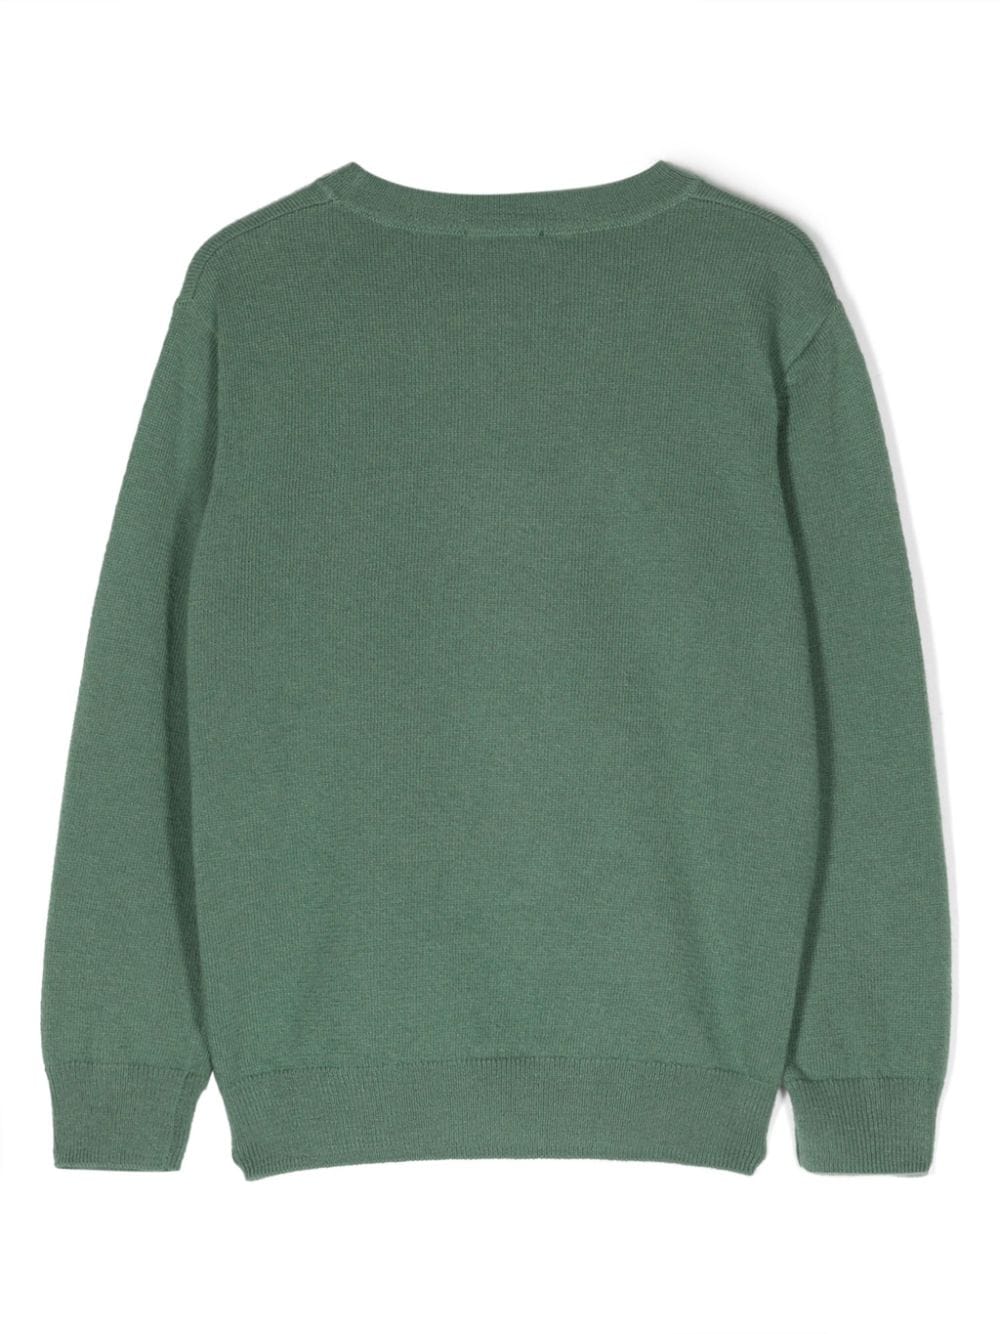 Green sweater for children